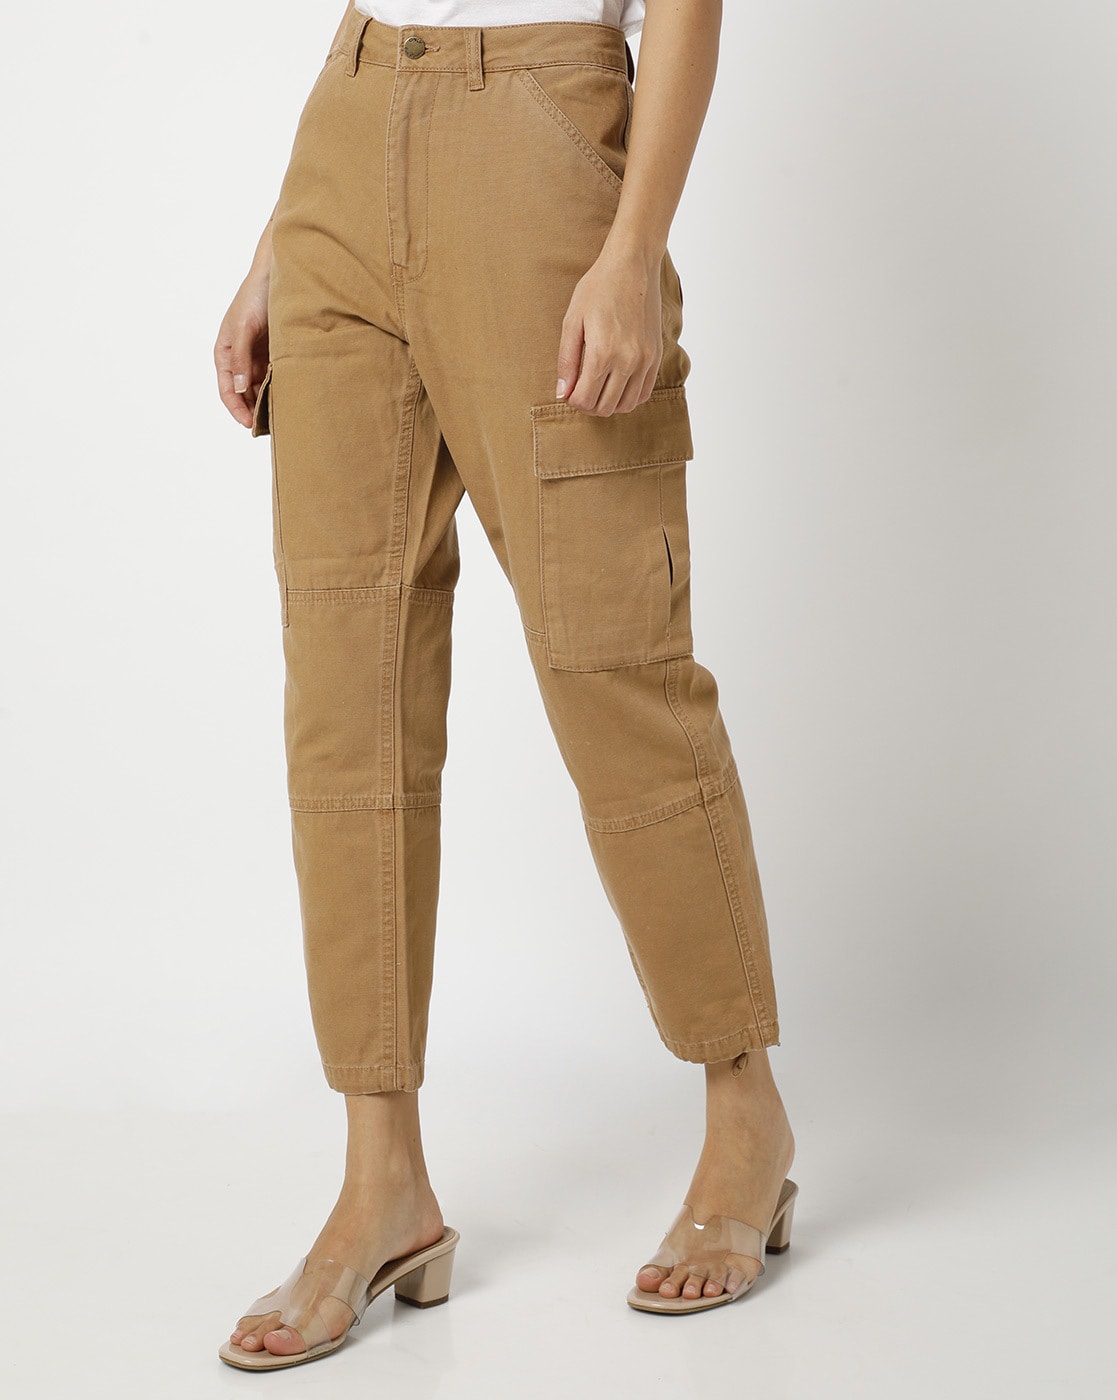 Buy Grey Trousers  Pants for Men by JAINISH Online  Ajiocom